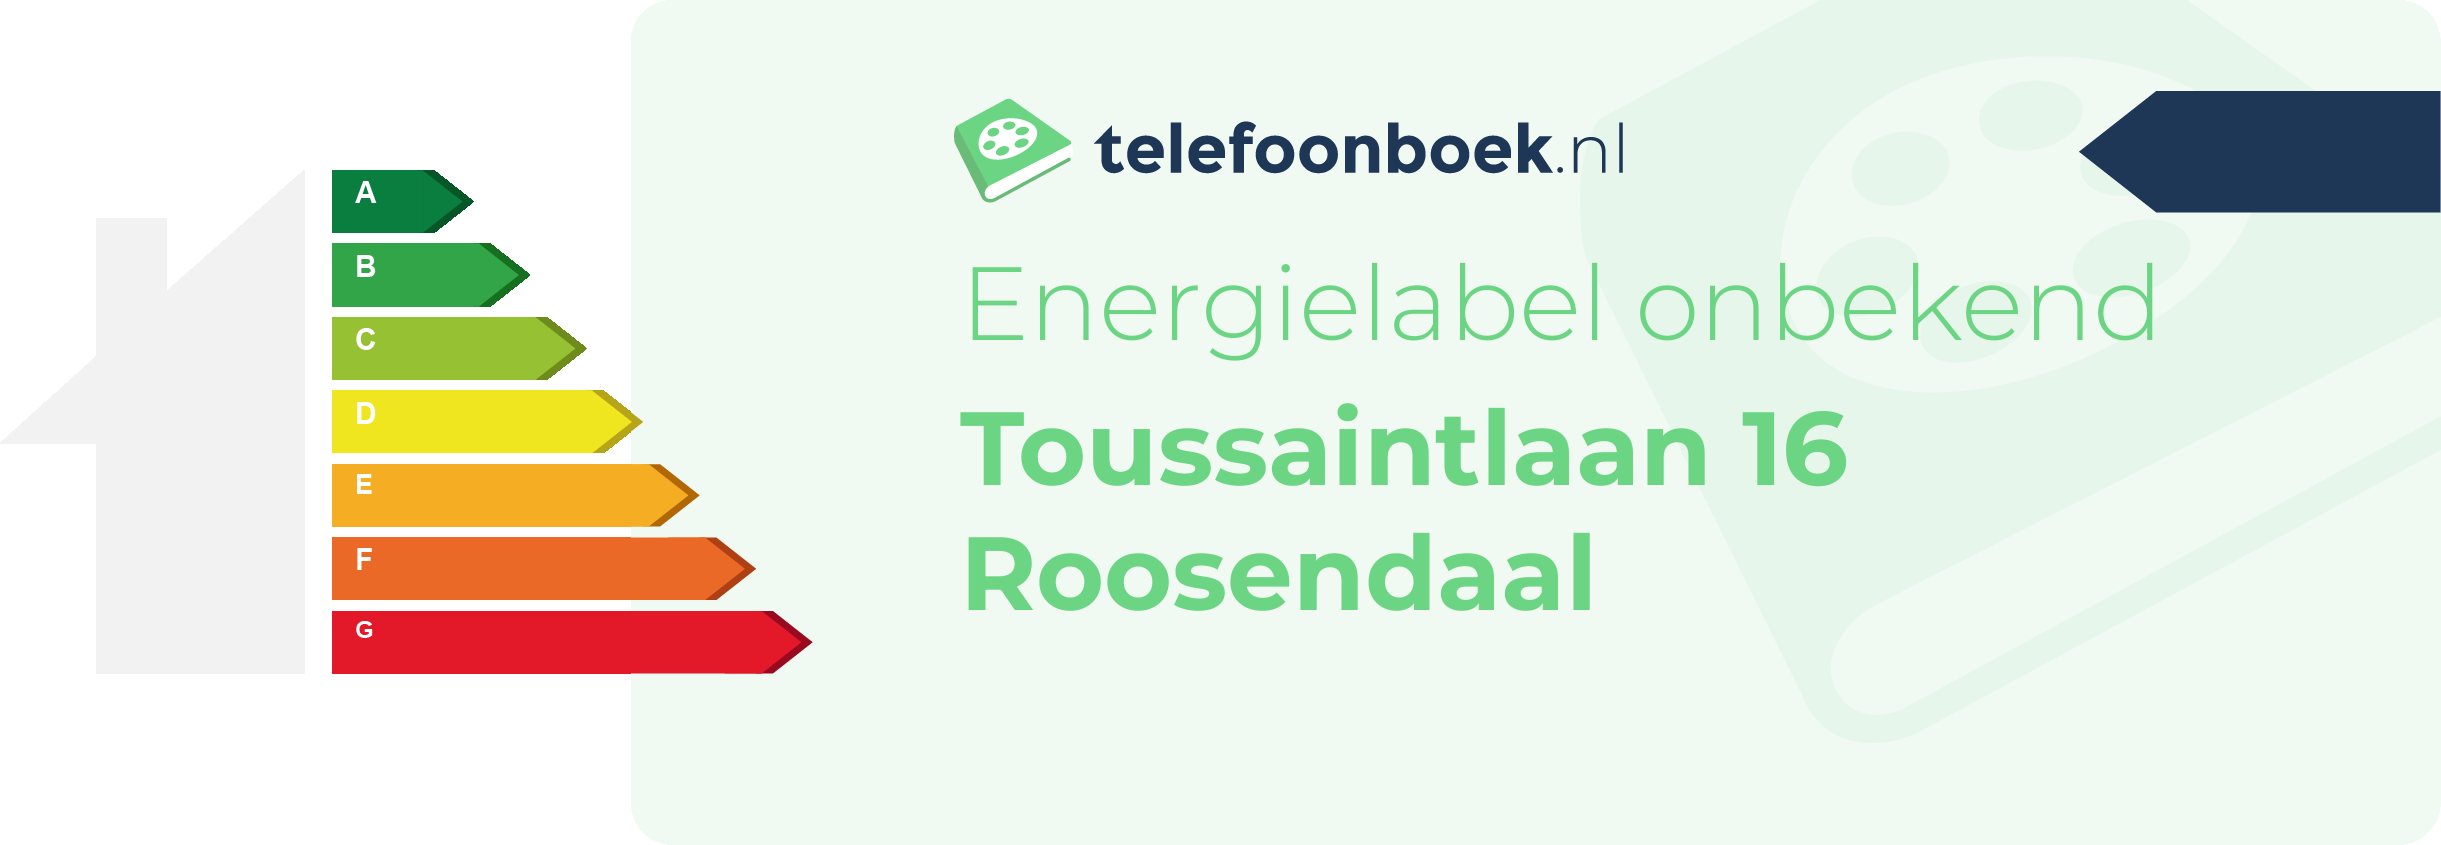 Energielabel Toussaintlaan 16 Roosendaal